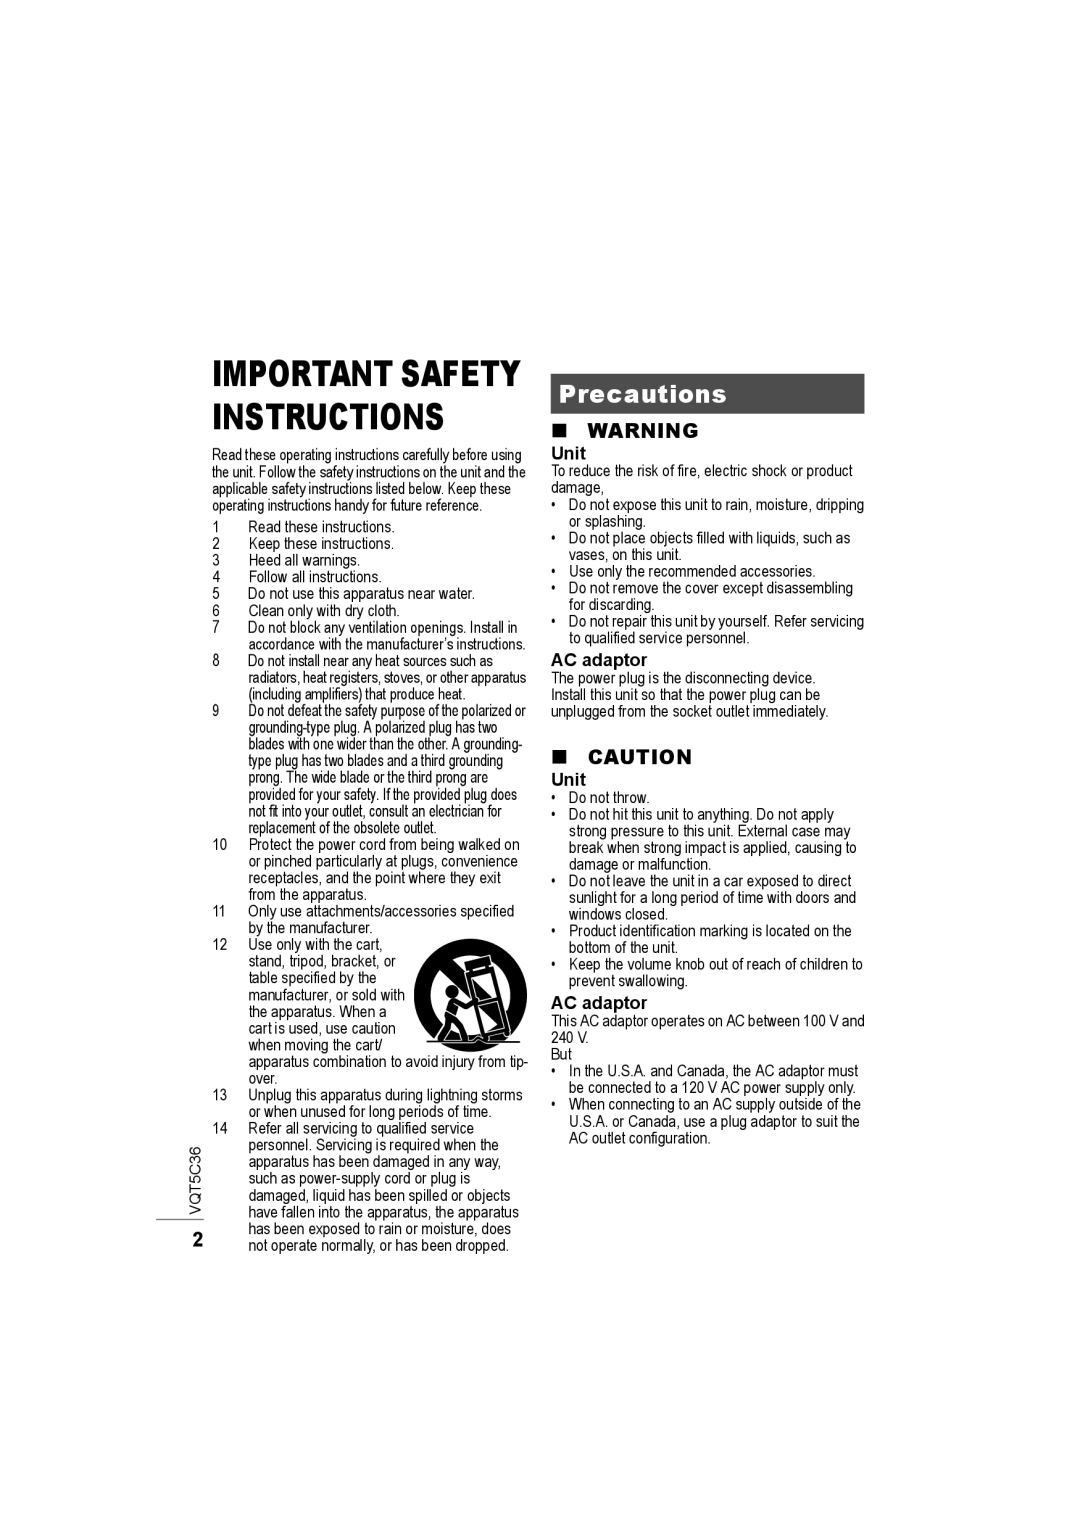 Panasonic SC-NA30 owner manual Precautions, Important Safety Instructions, Unit, AC adaptor 